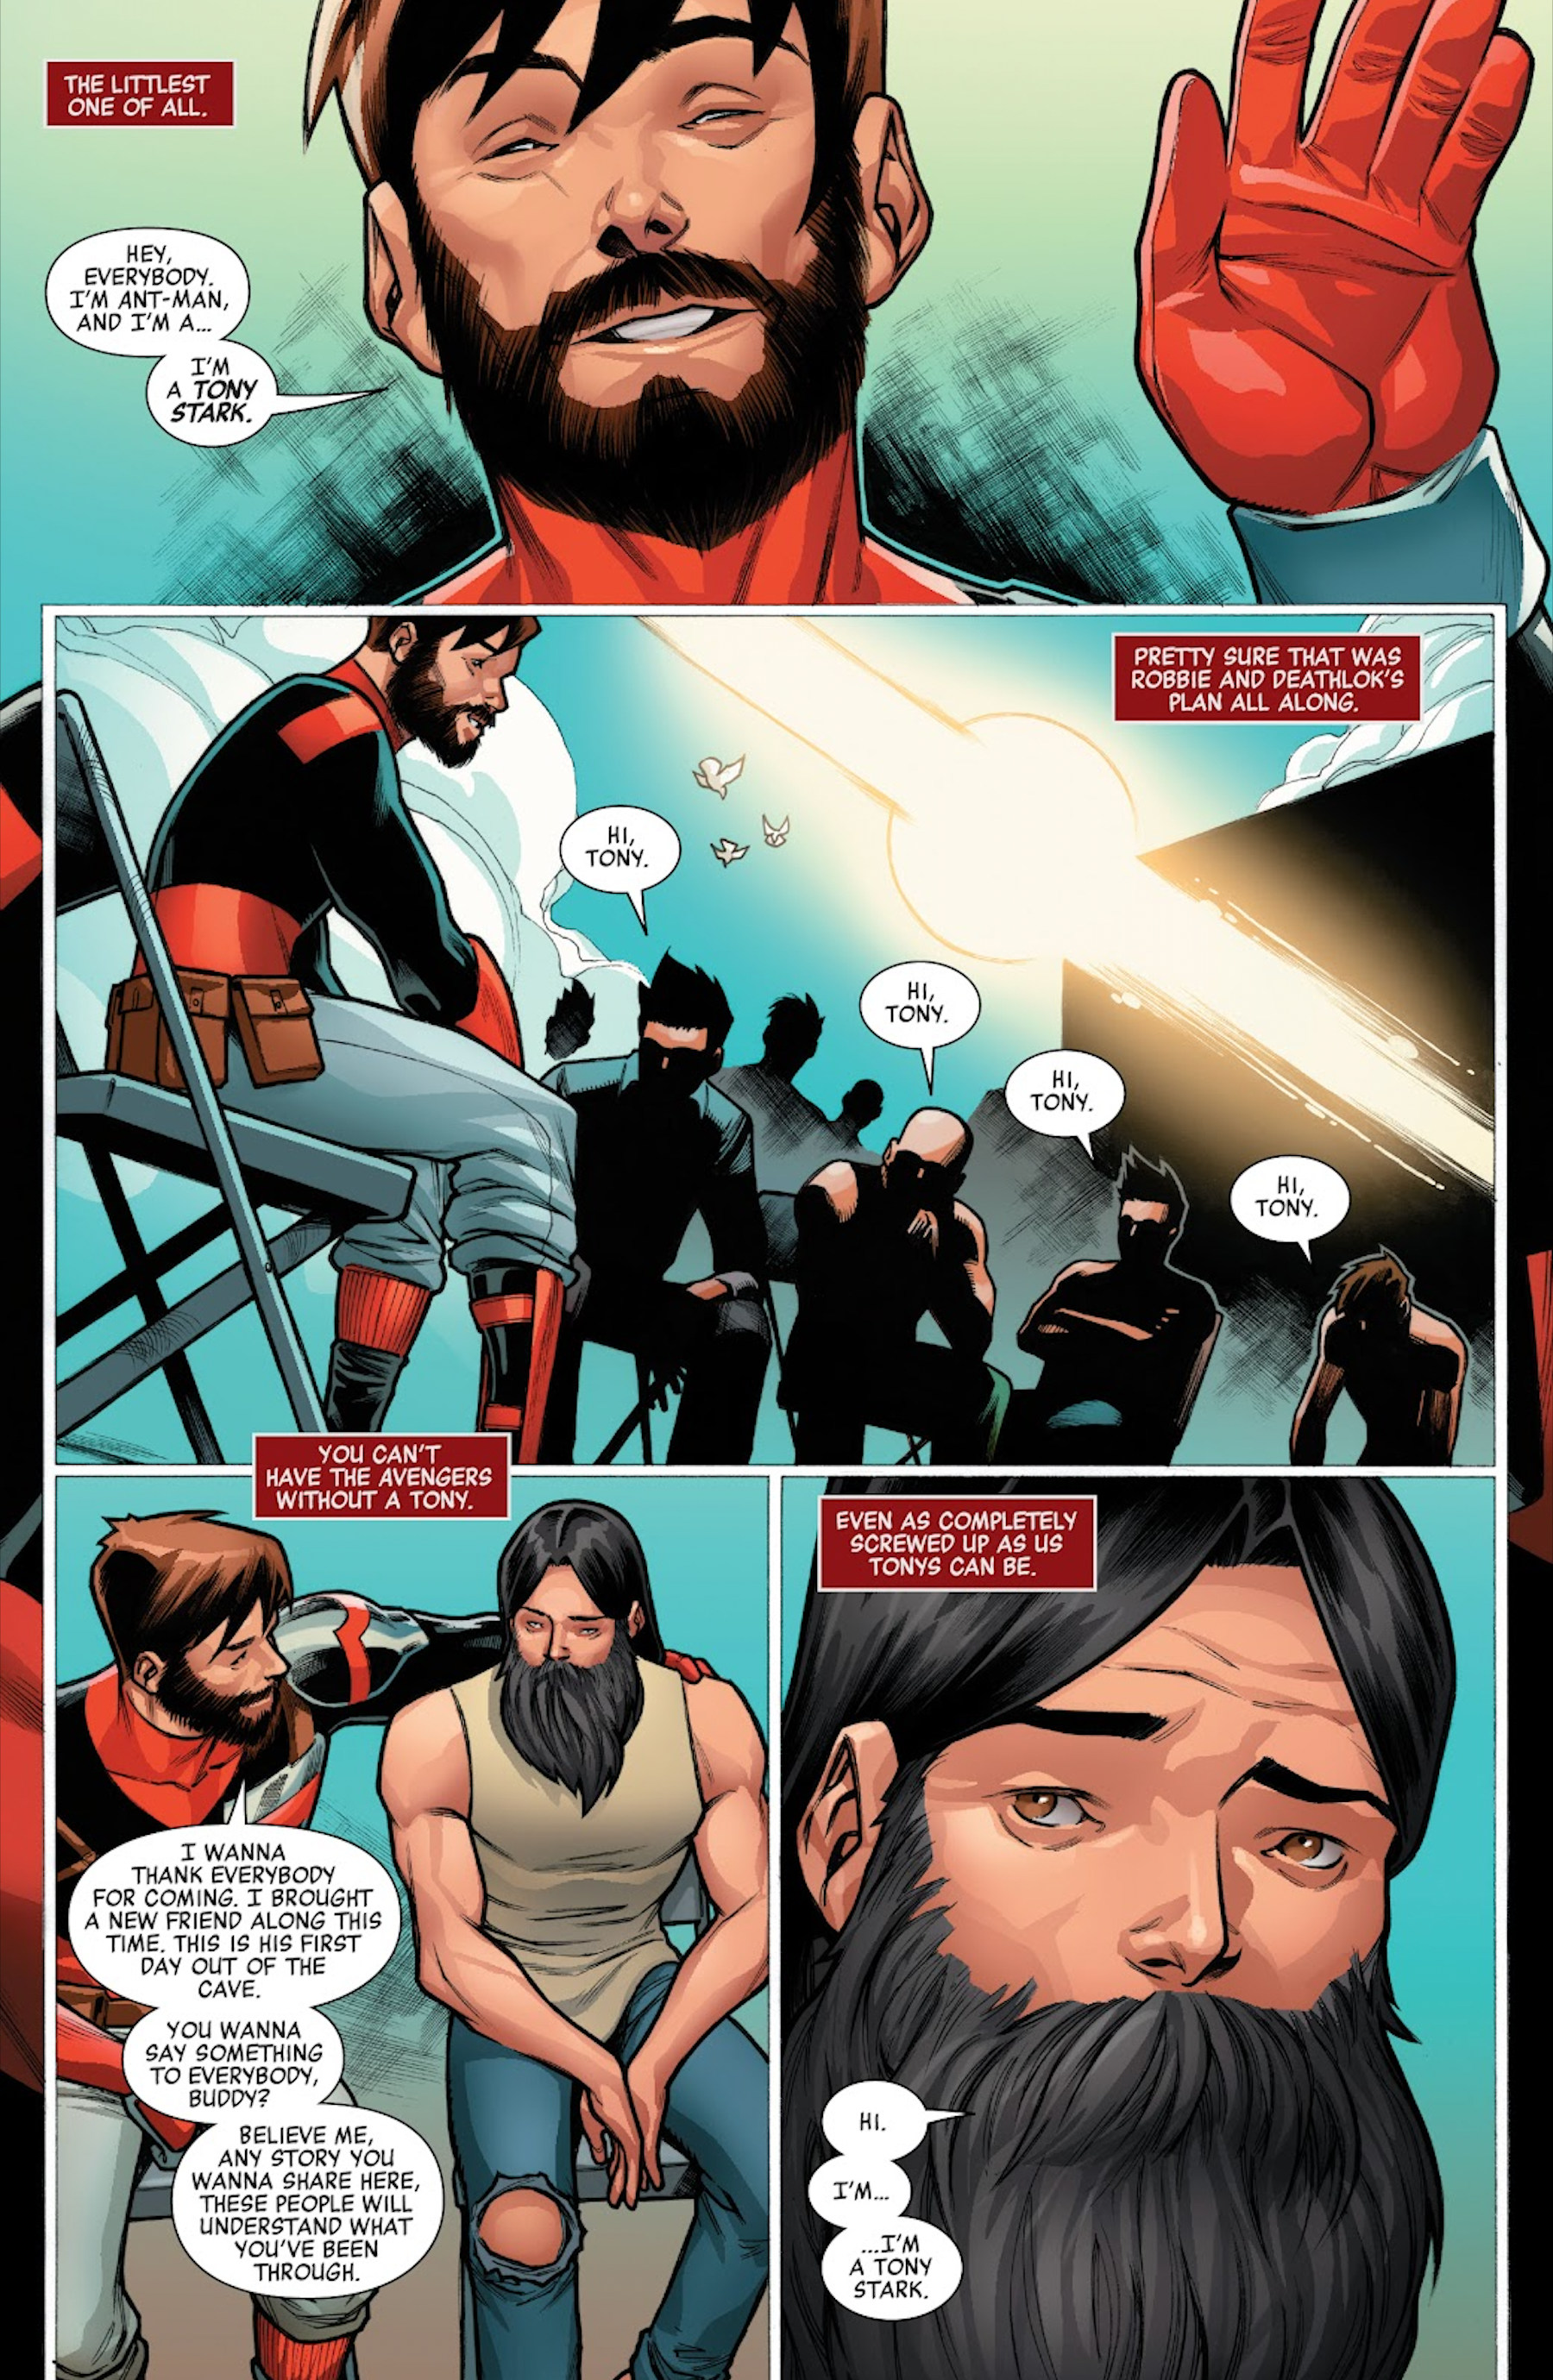 Iron Man creates the Tony Stark Support Group